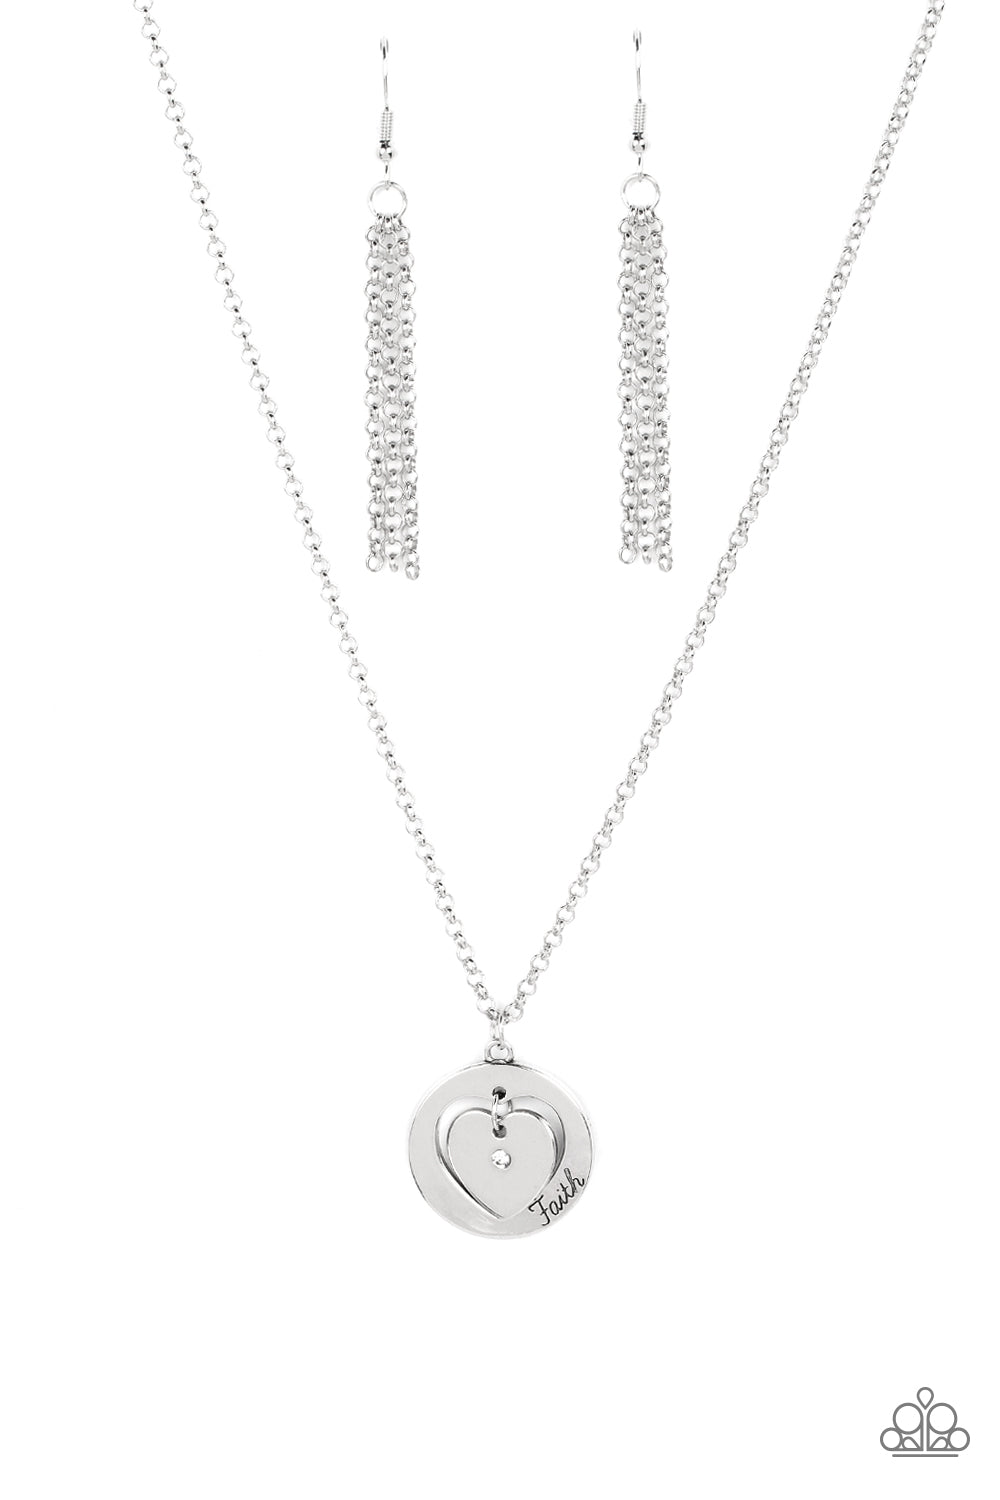 Heart Full of Faith - White Dainty Rhinestone/Silver Heart Charm Pendant Paparazzi Necklace & matching earrings